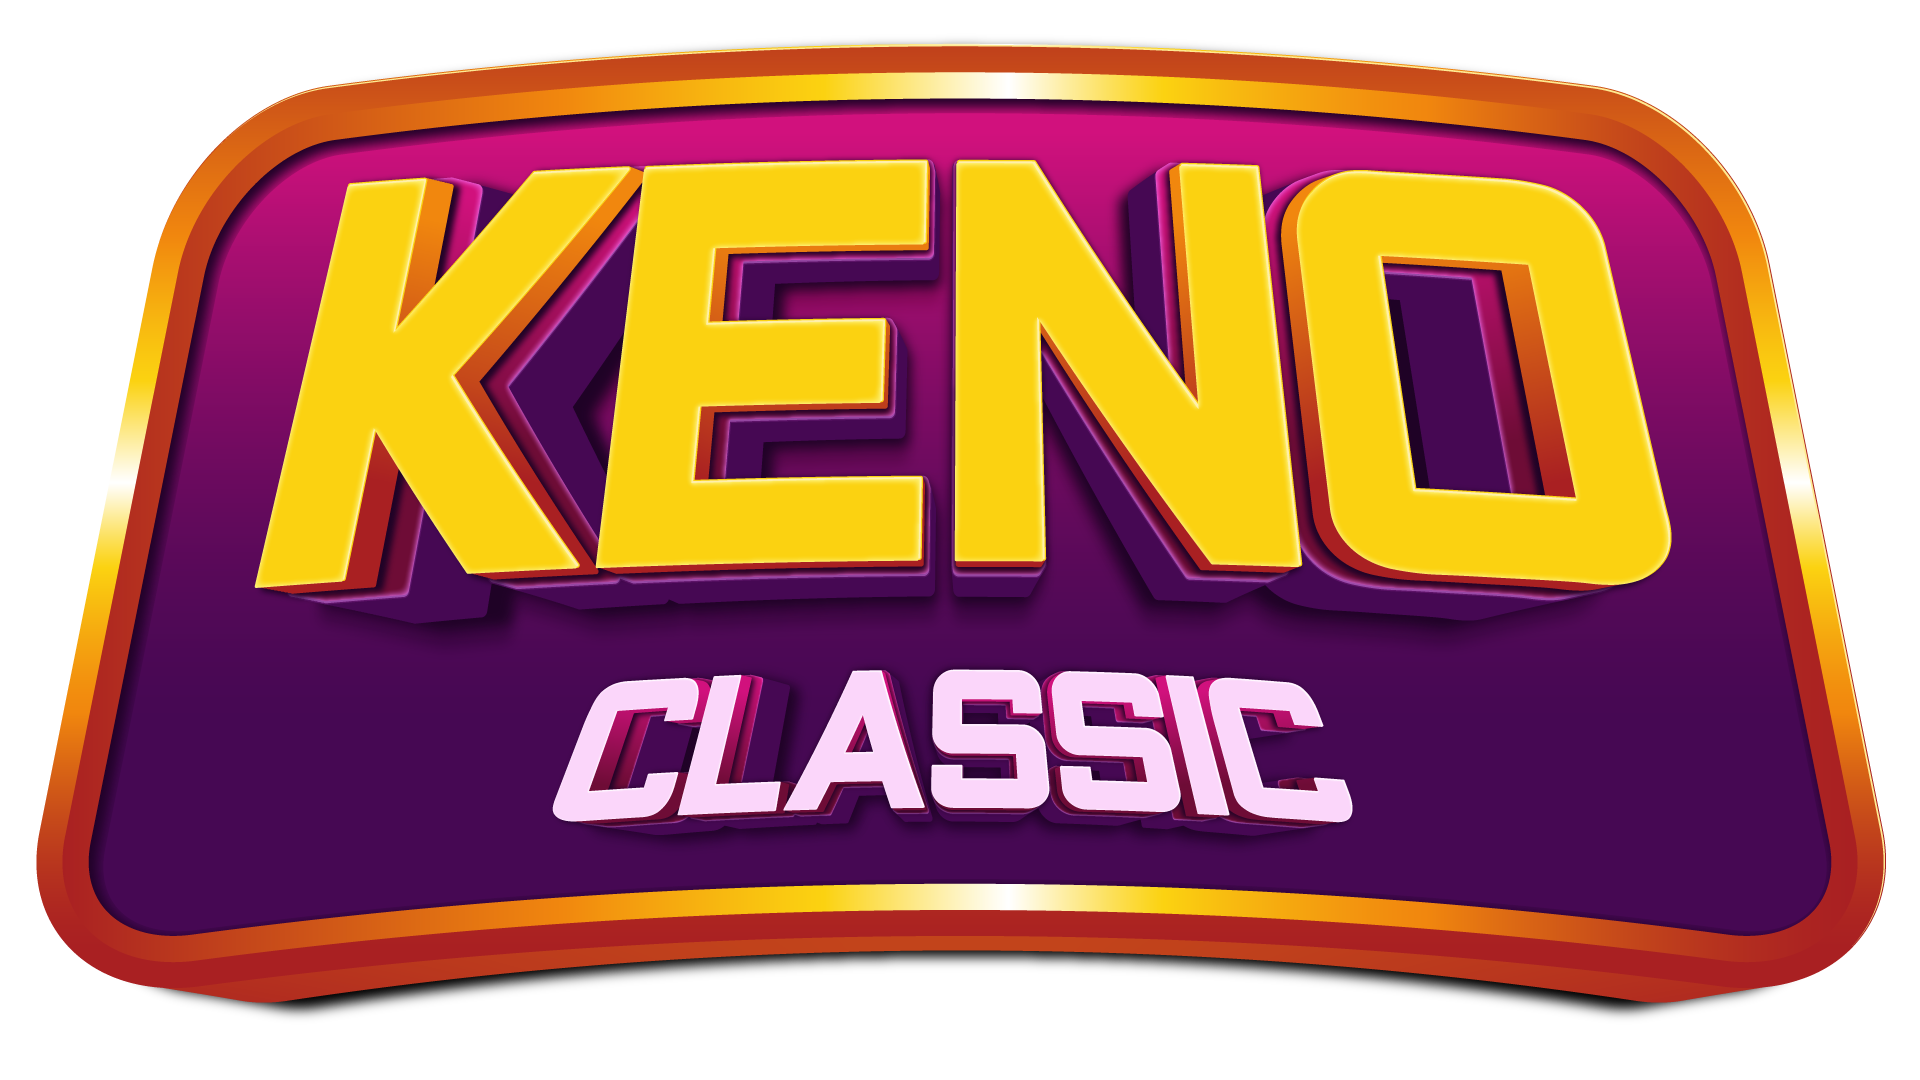 Keno Classic ball